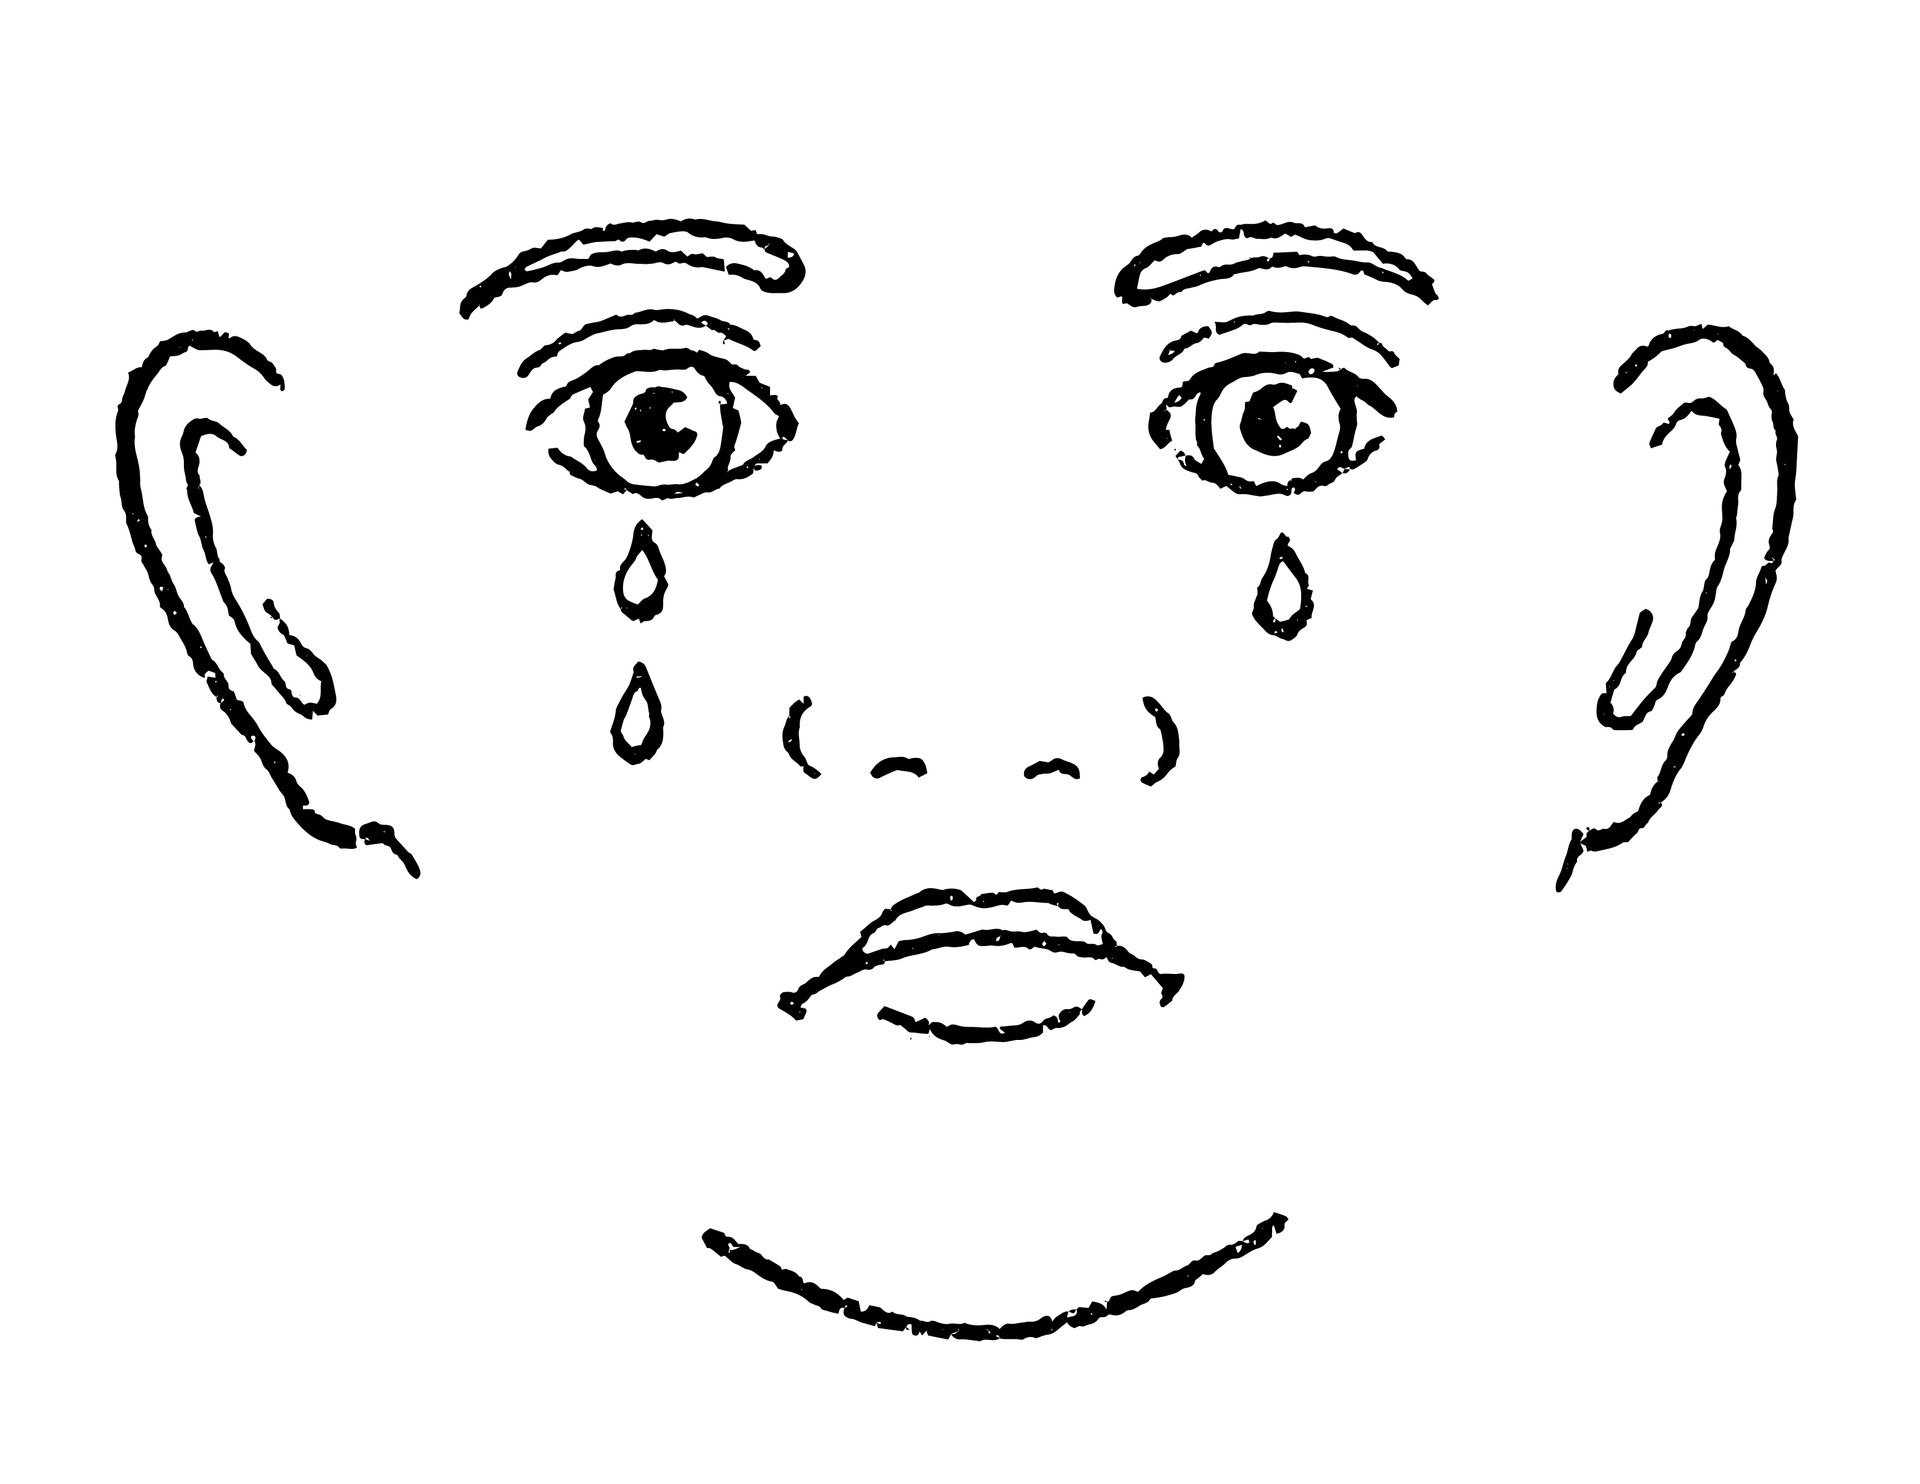 An illustration of a sad face.